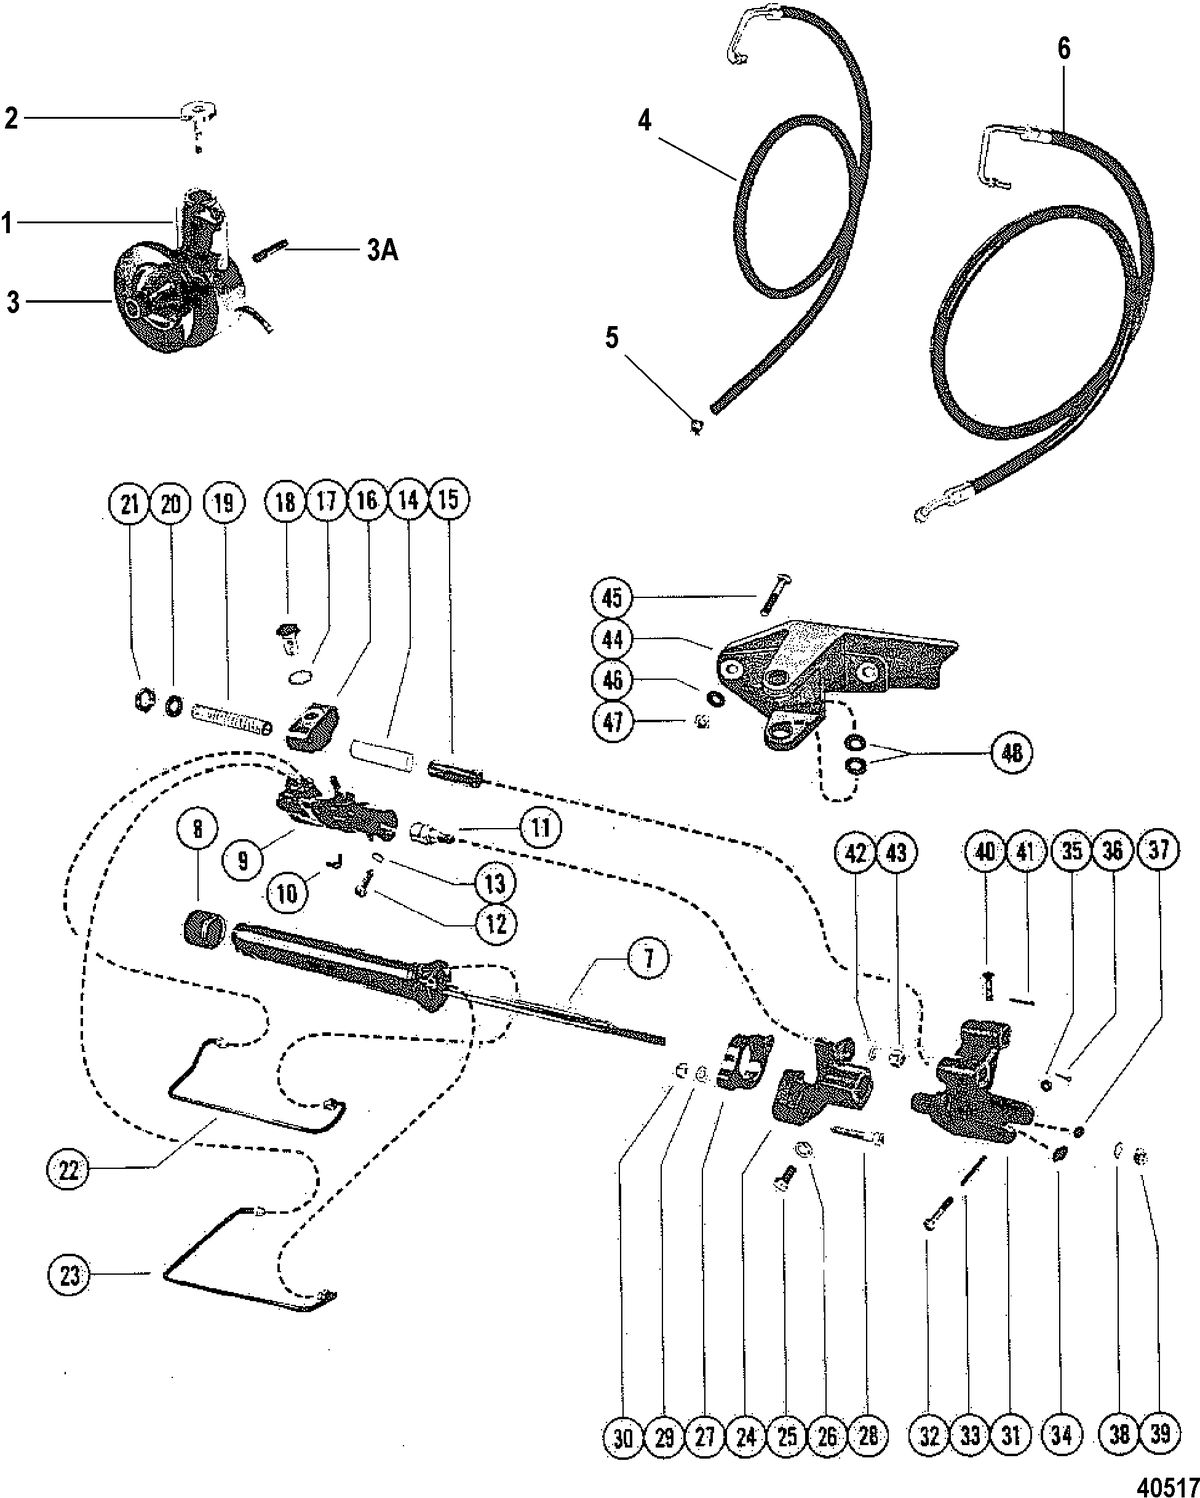 MERCRUISER 470 ENGINE Power Steering Kit(Page 1 of 2)